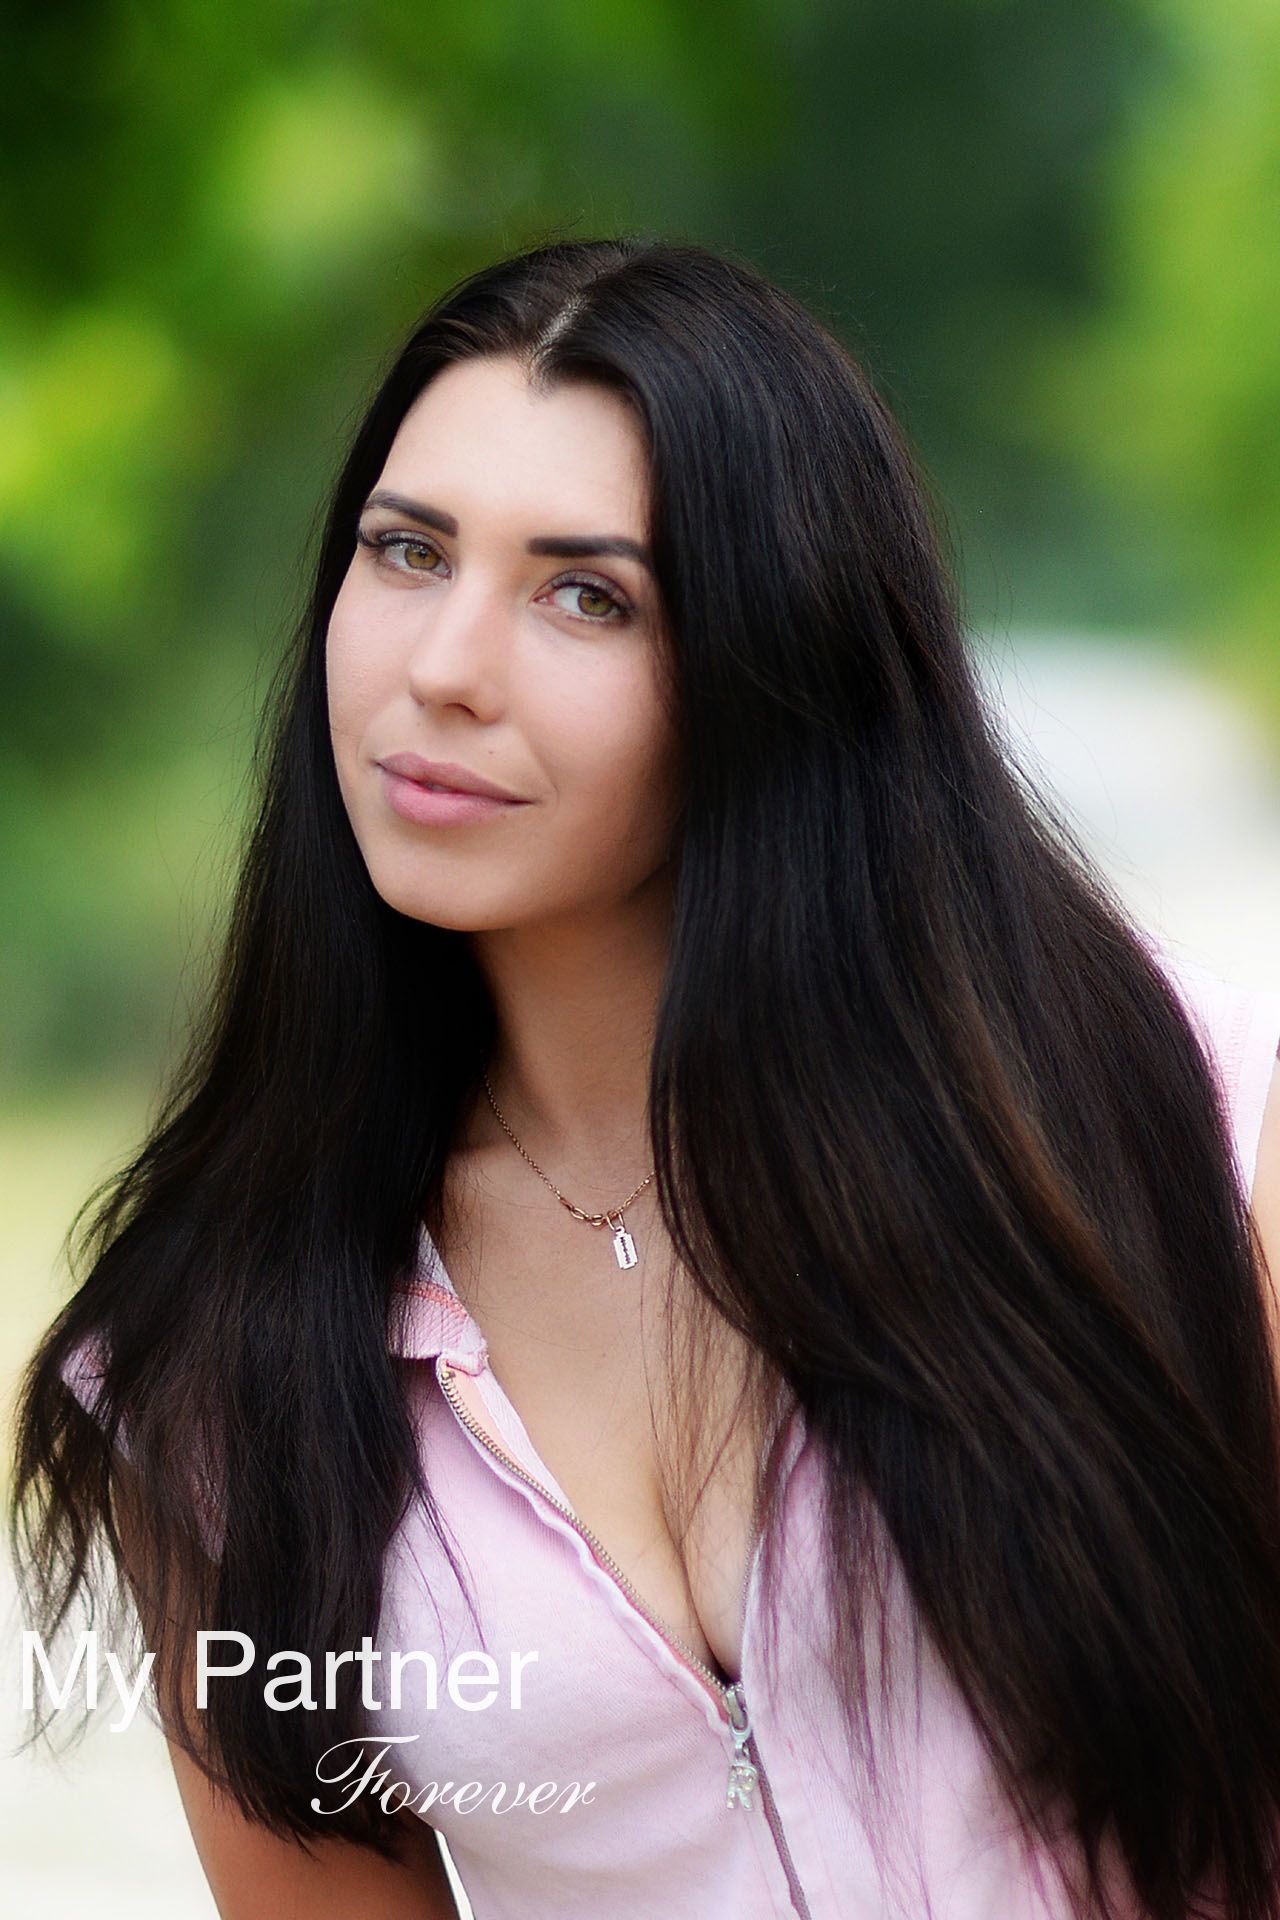 Dating Service to Meet Single Ukrainian Woman Kristina from Kharkov, Ukraine